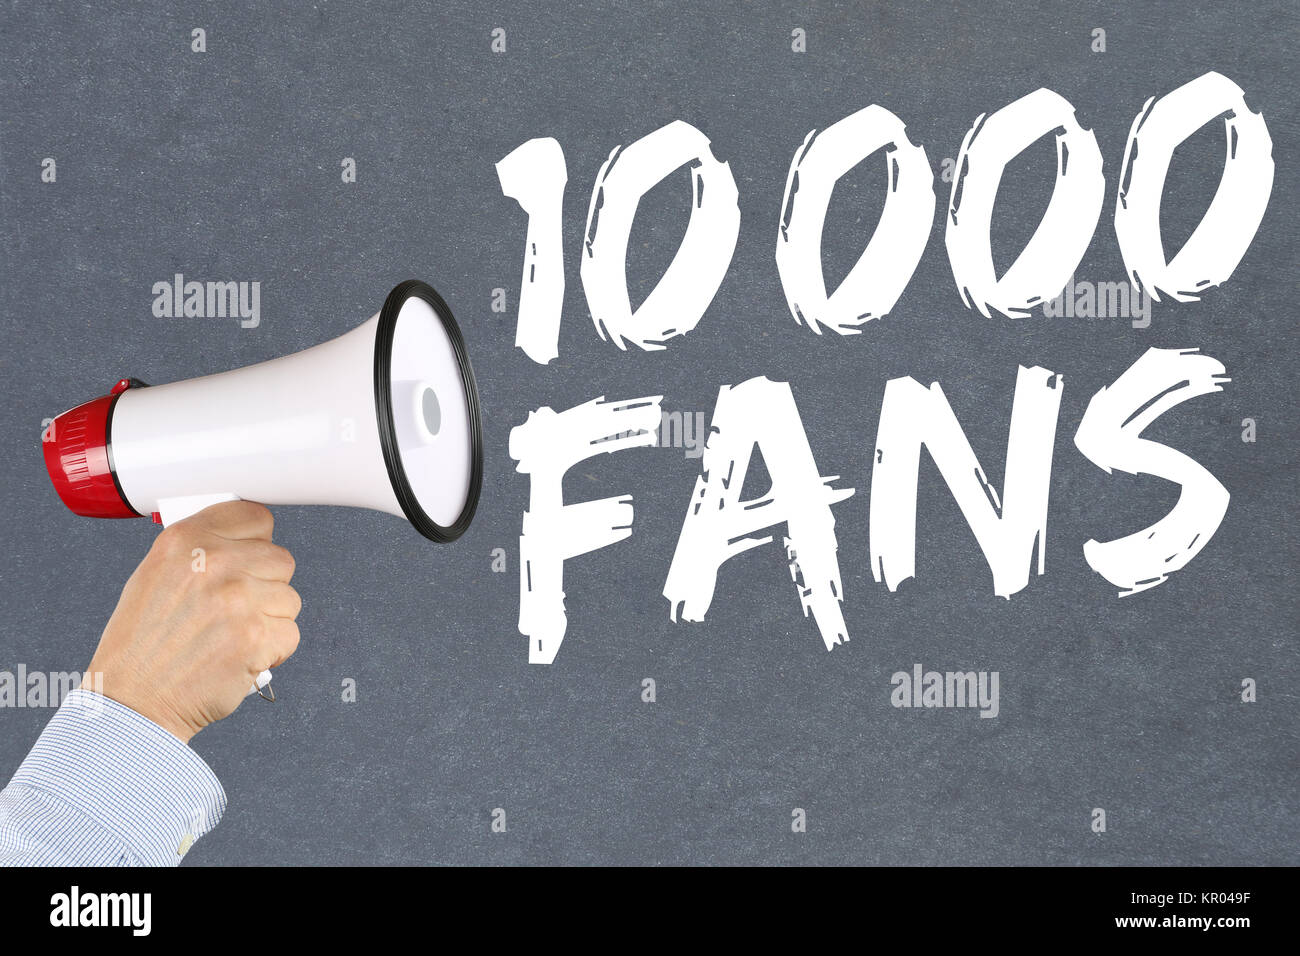 10000 fans likes social media networks concept of megafon Stock Photo